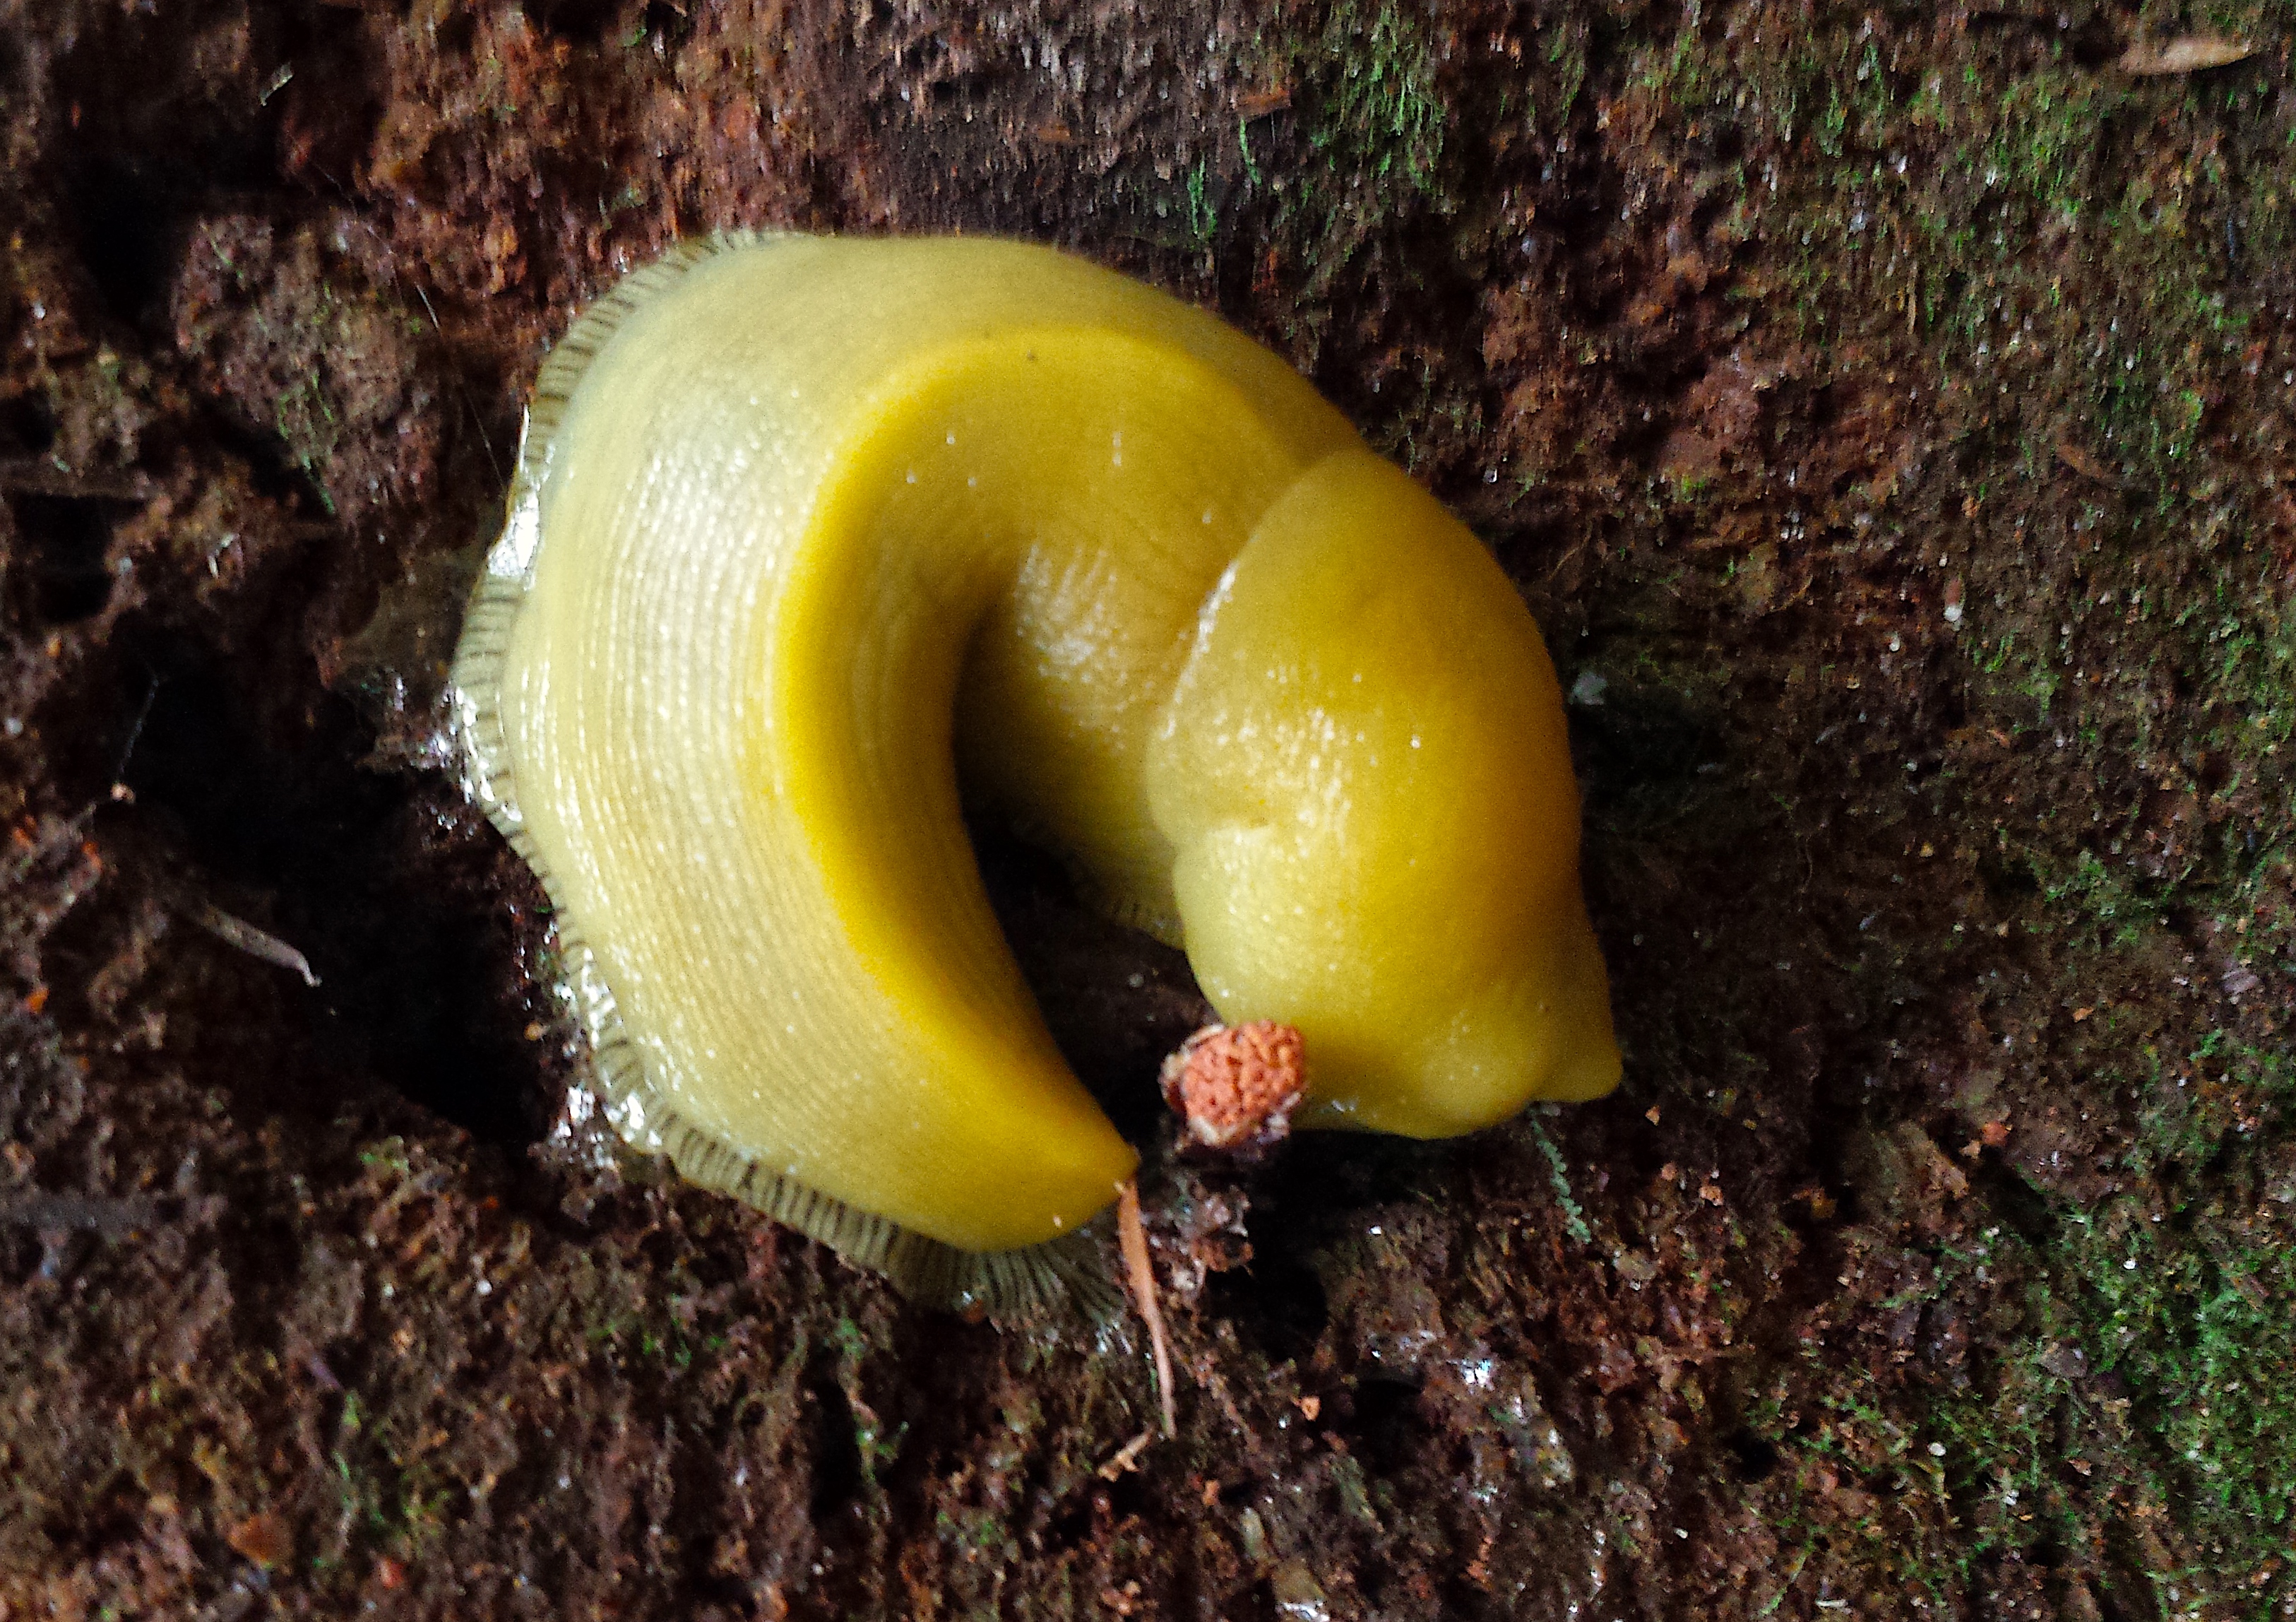 wp285 03 curled banana slug 20200613